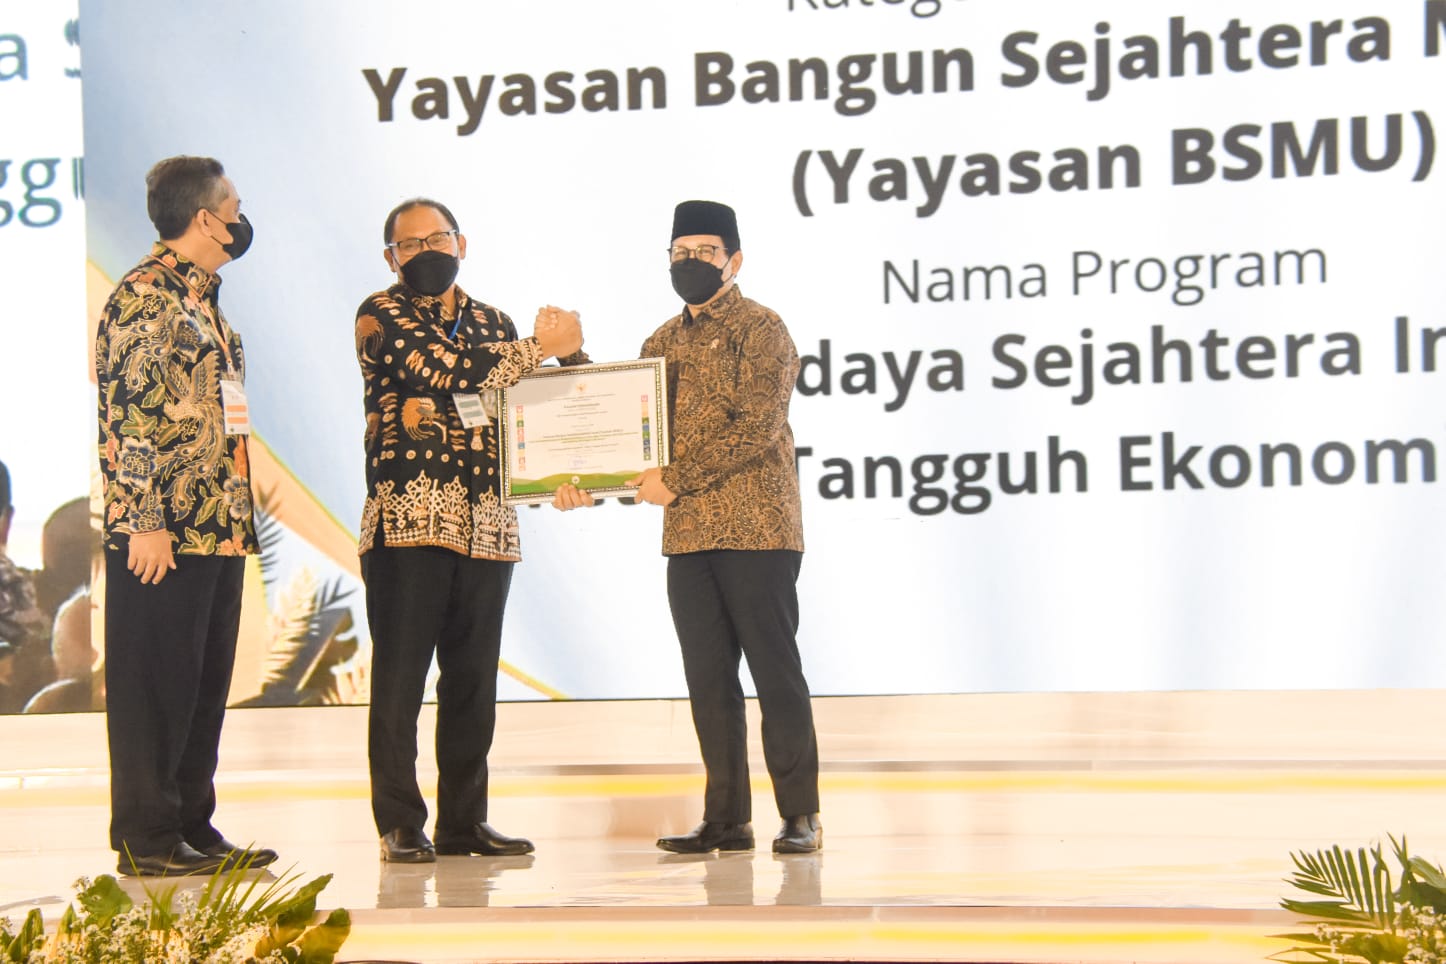 Yayasan BSM Umat CSR Kemendes Award